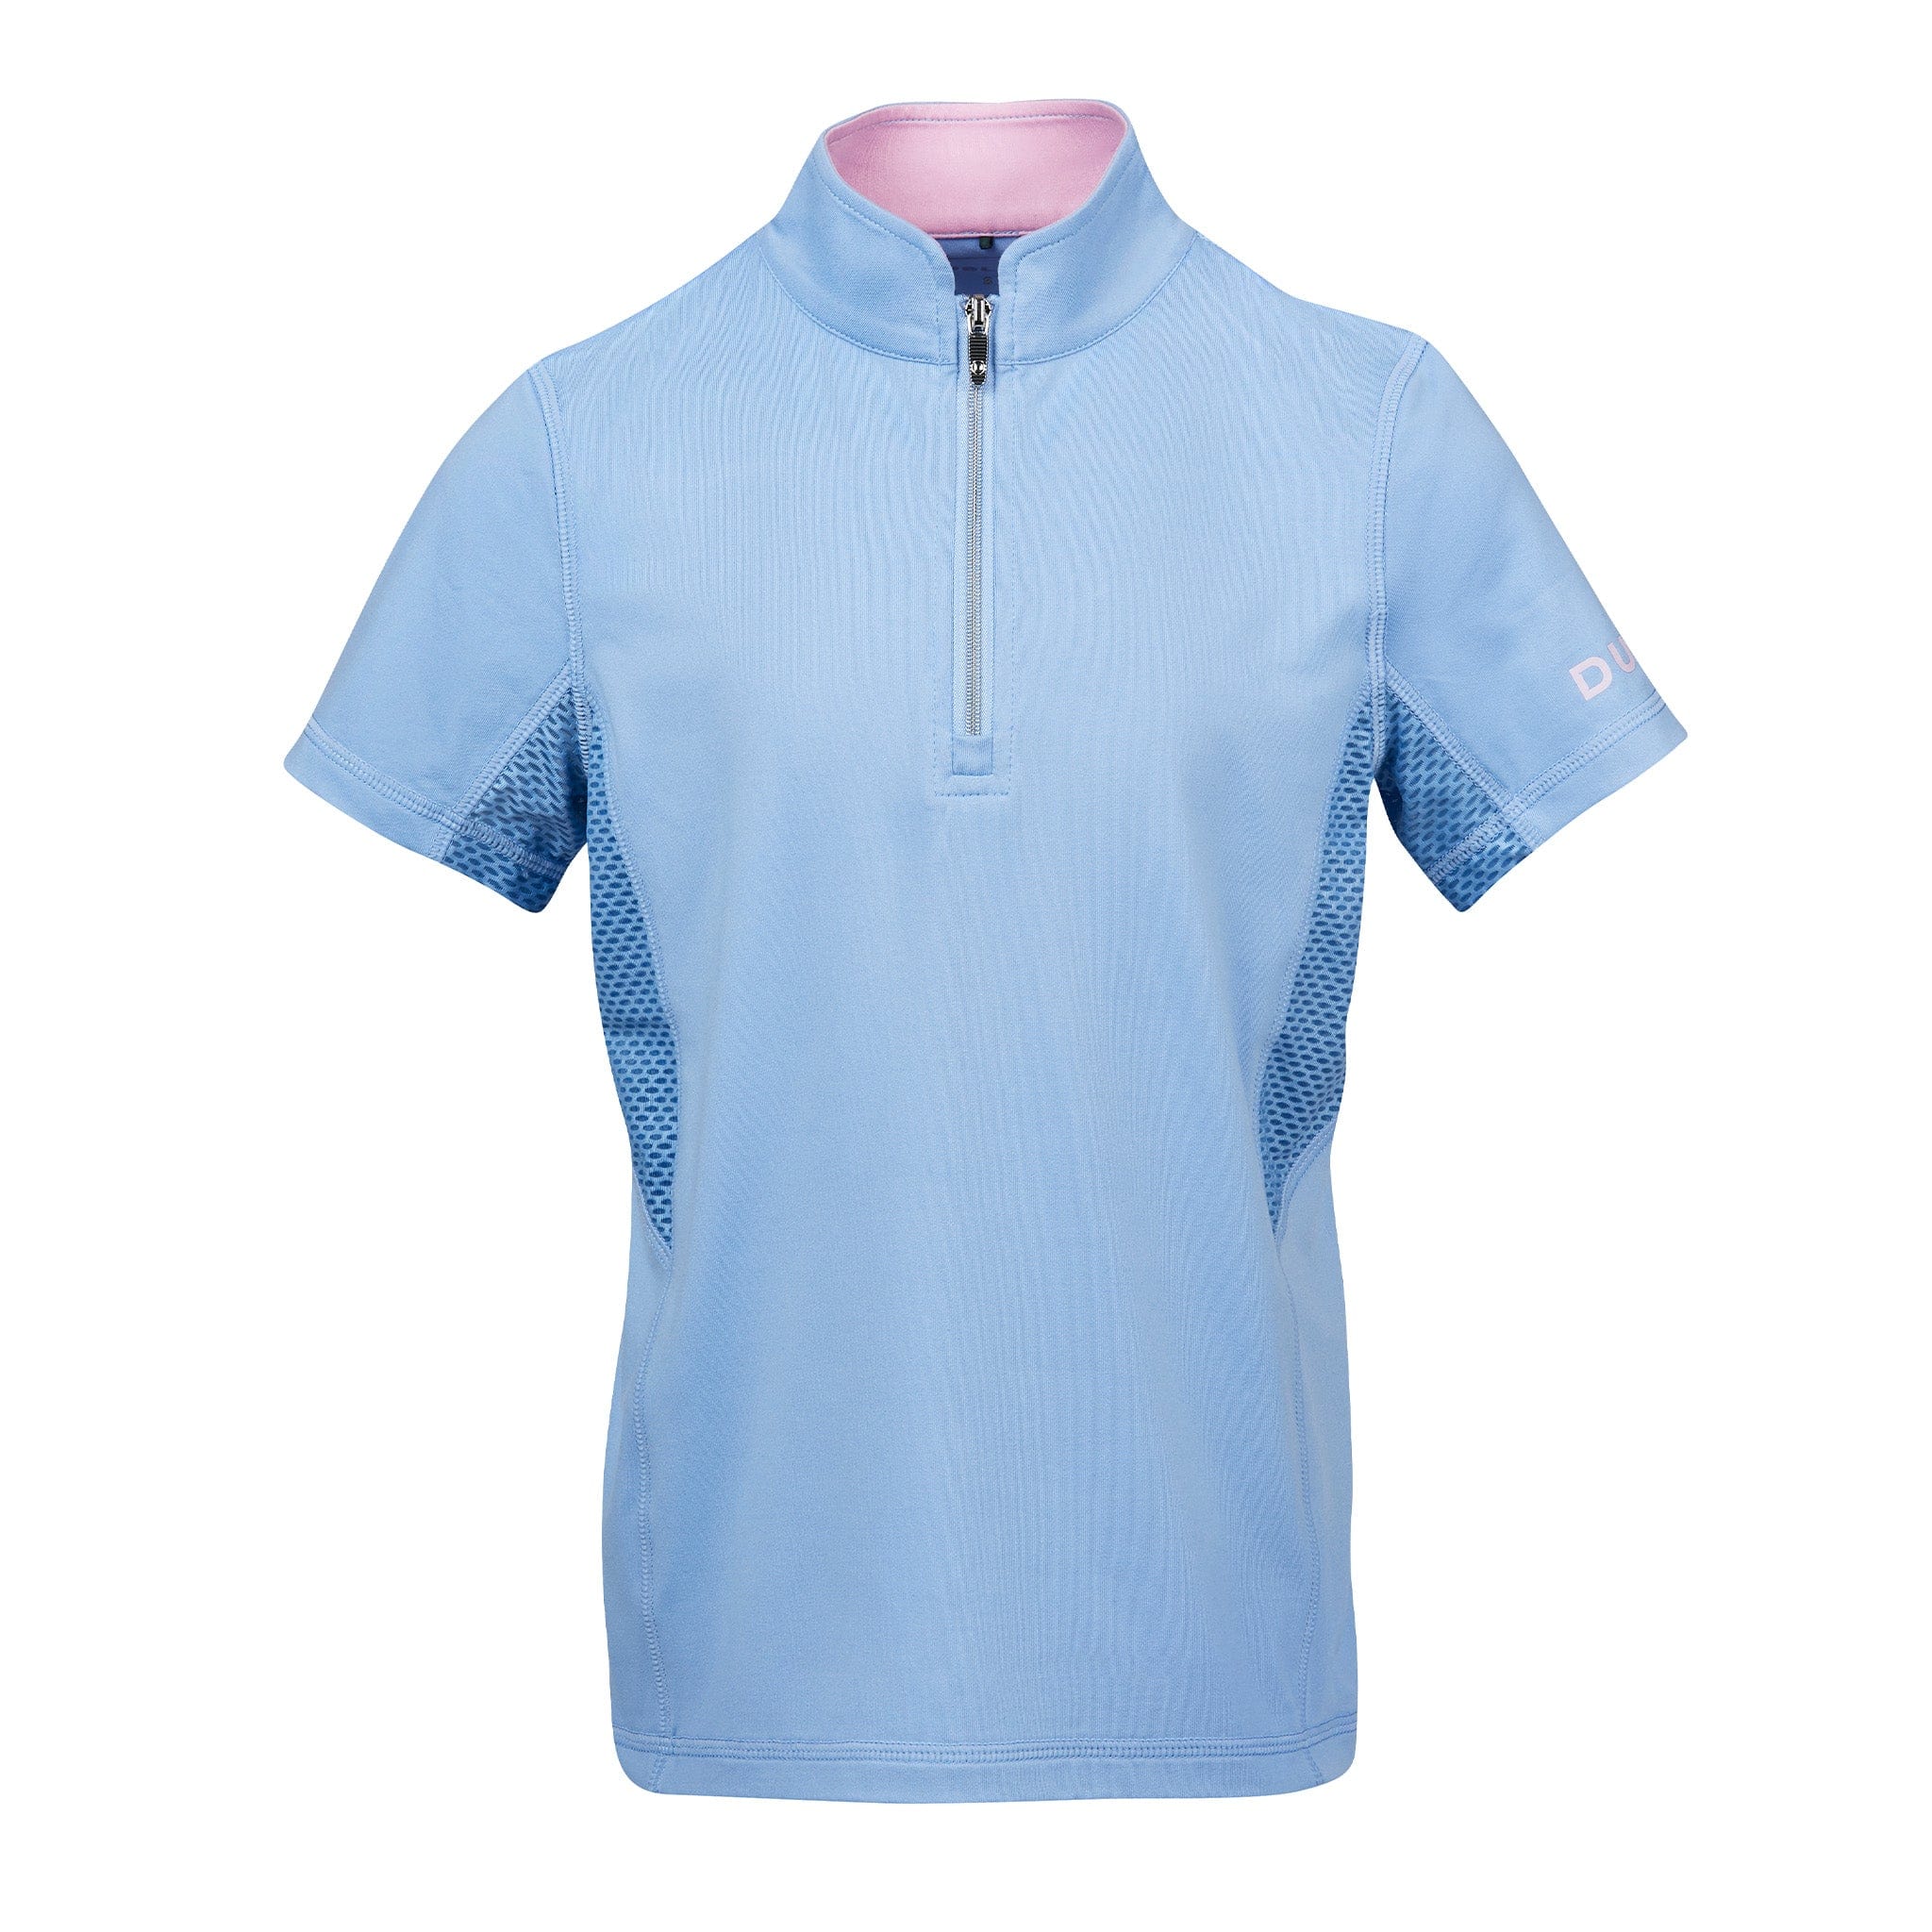 Dublin Children's Kylee Short Sleeve Shirt II 1005525164 Bluebell